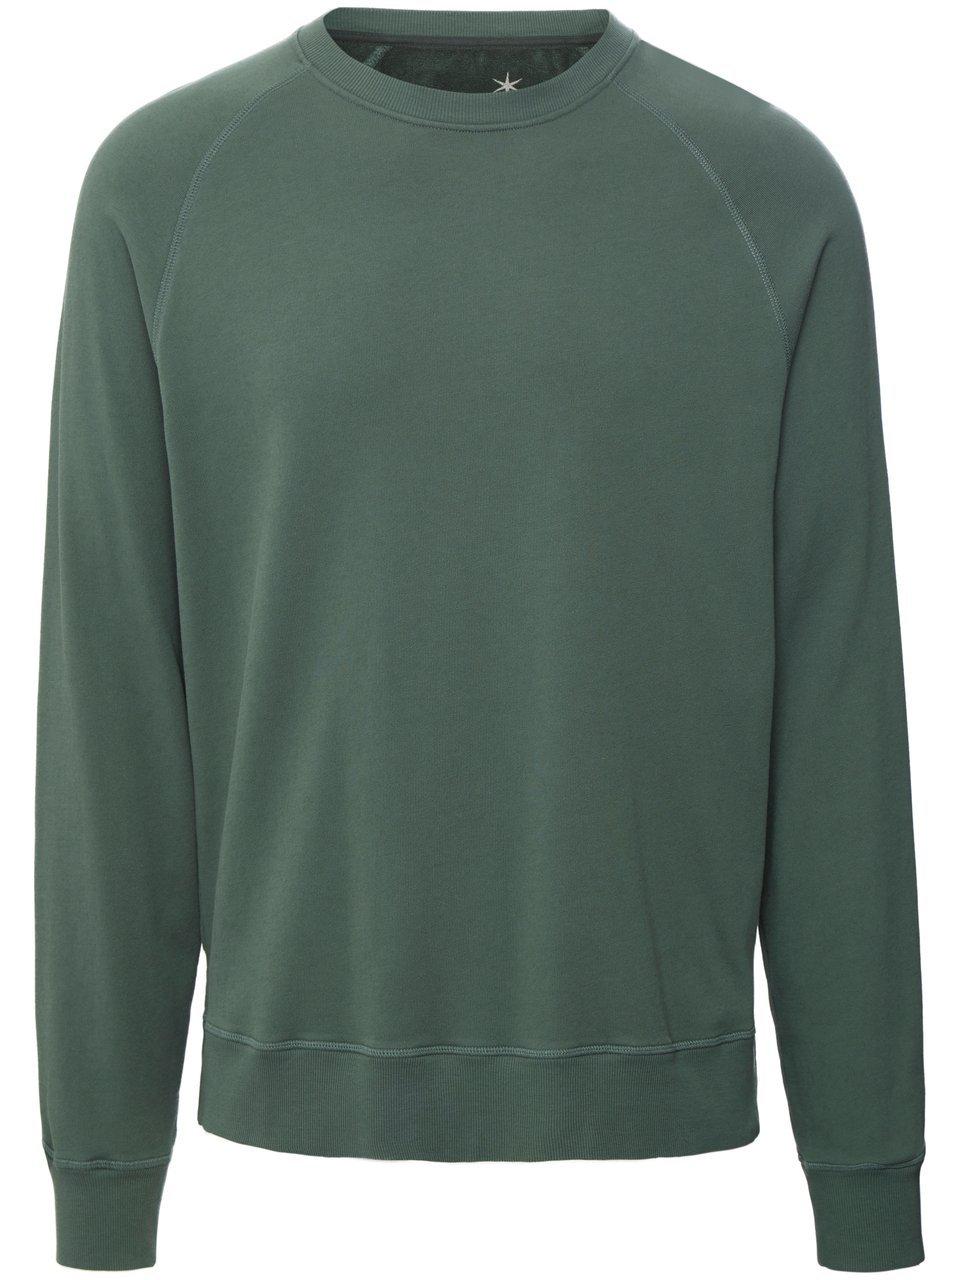 Le sweatshirt 100% coton  Juvia vert